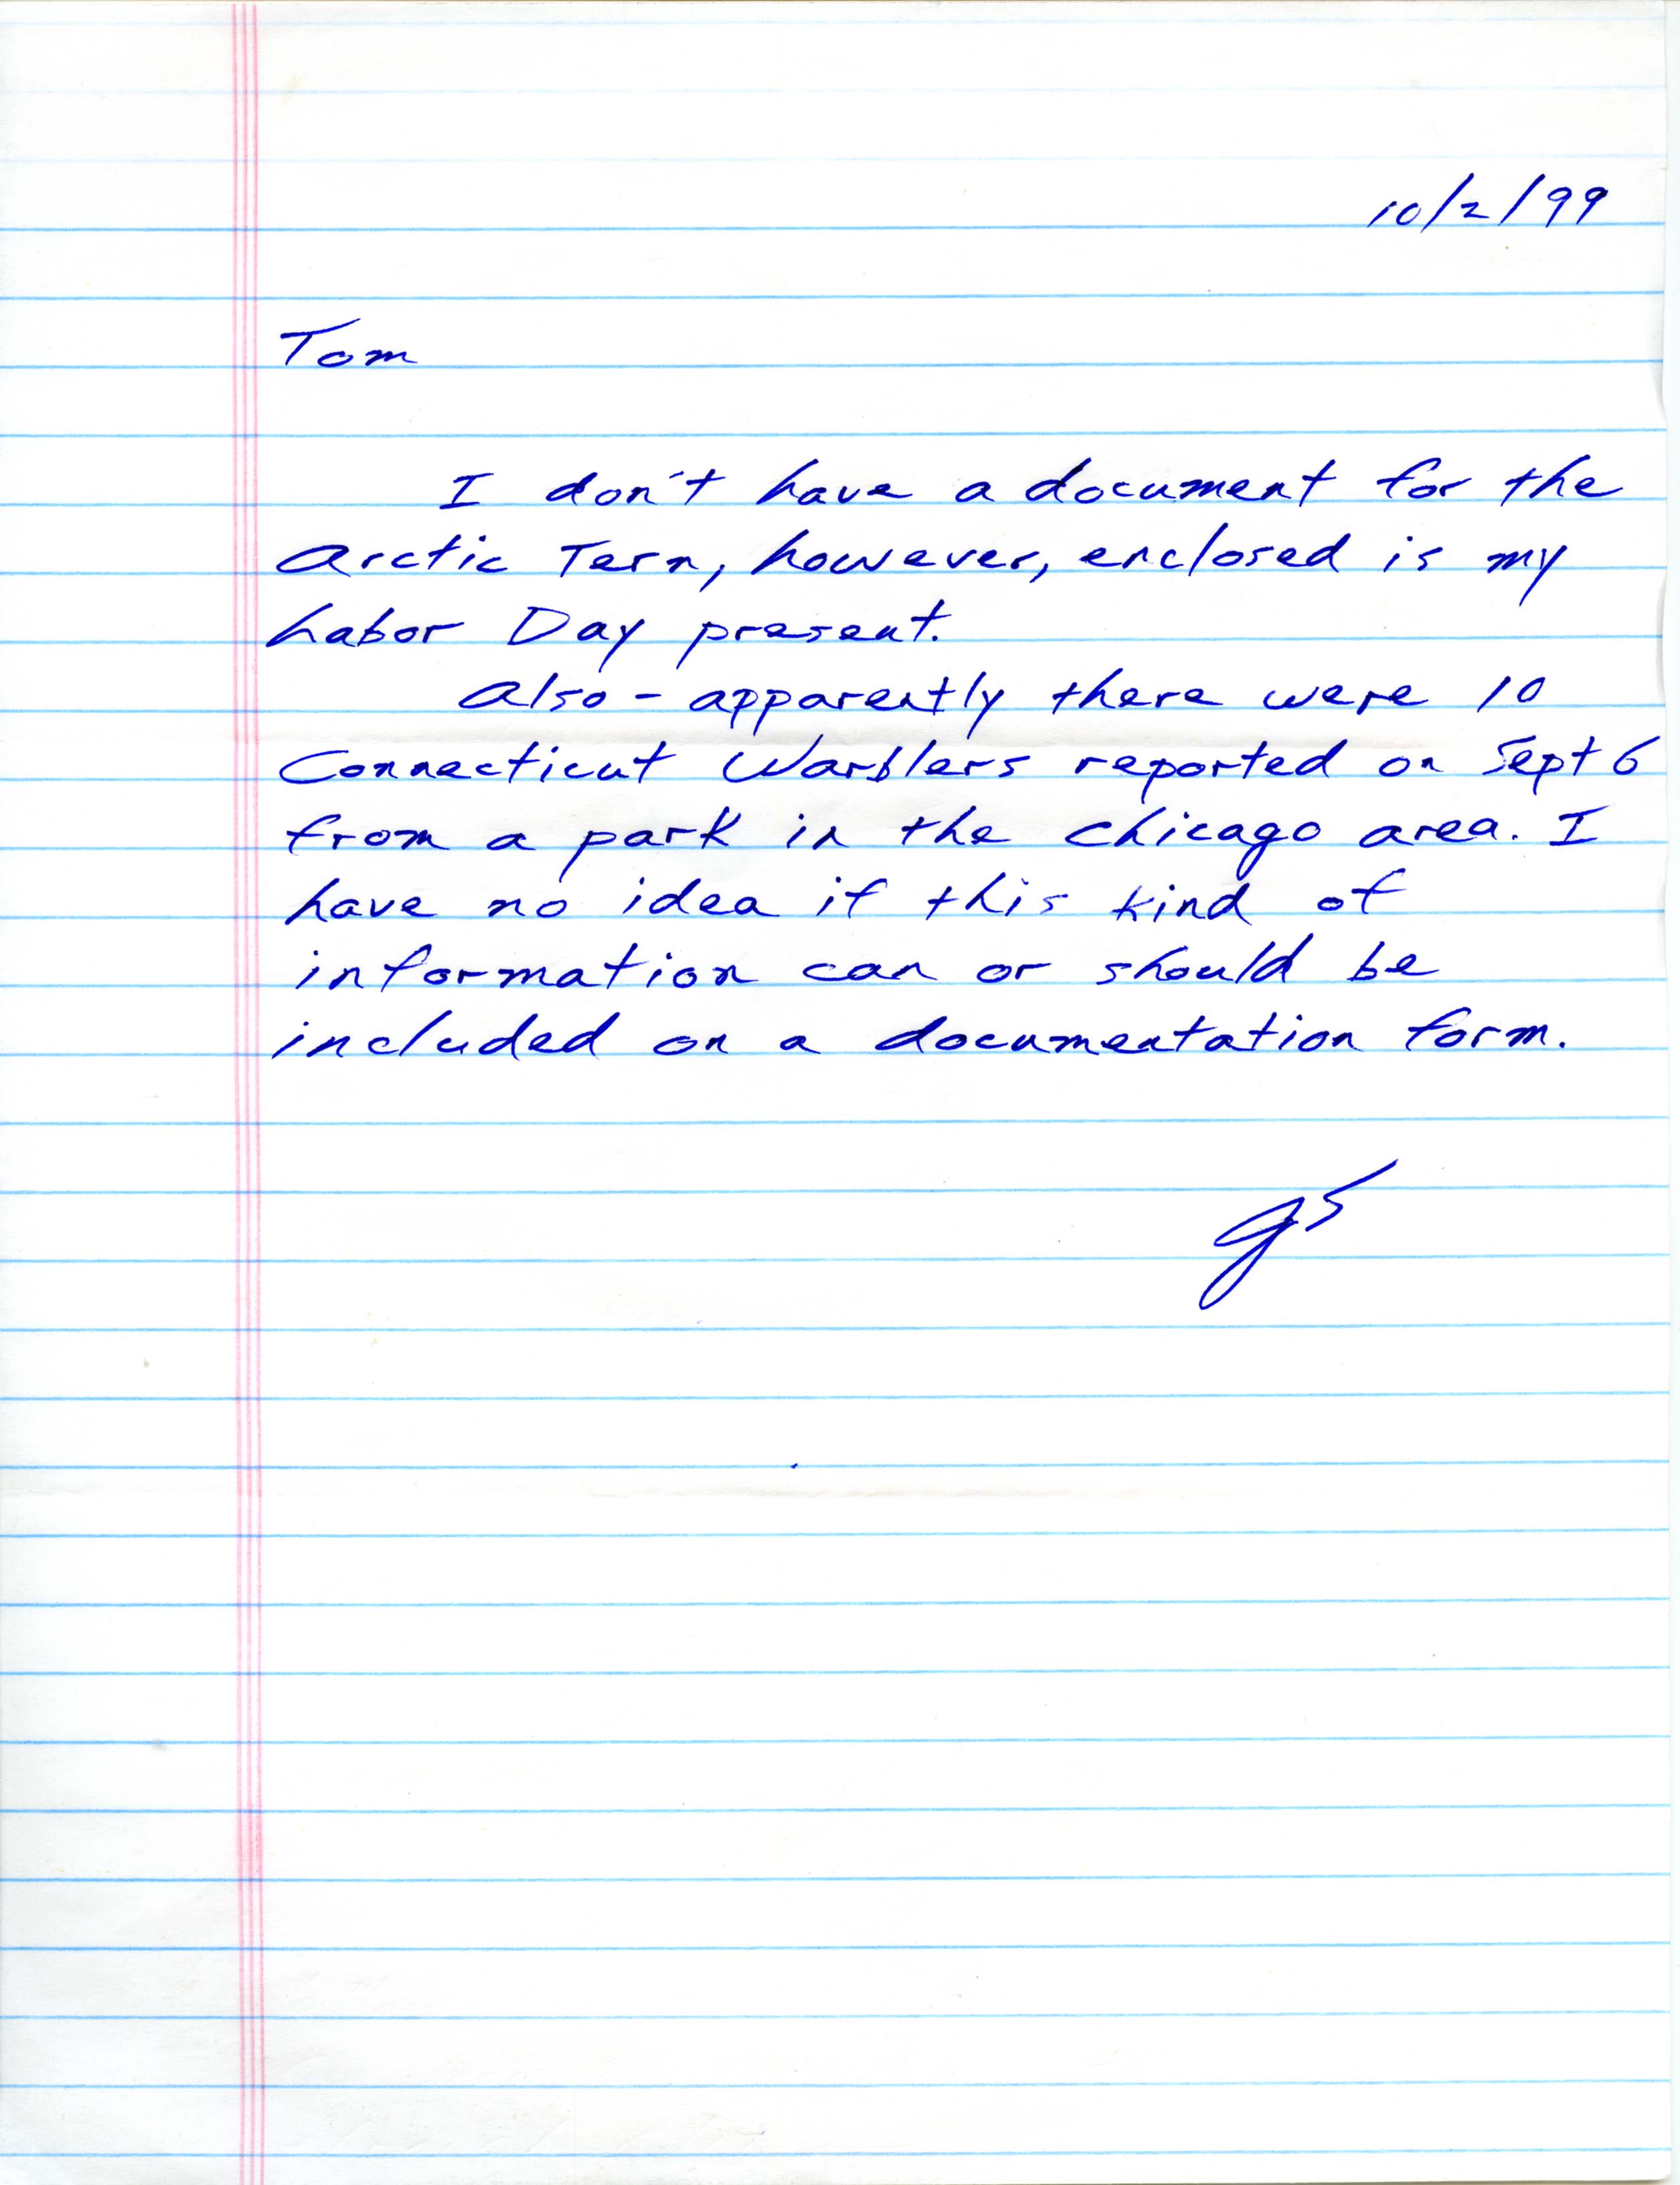 Jim Sinclair letter to Thomas Kent regarding bird documentation, October 2, 1999